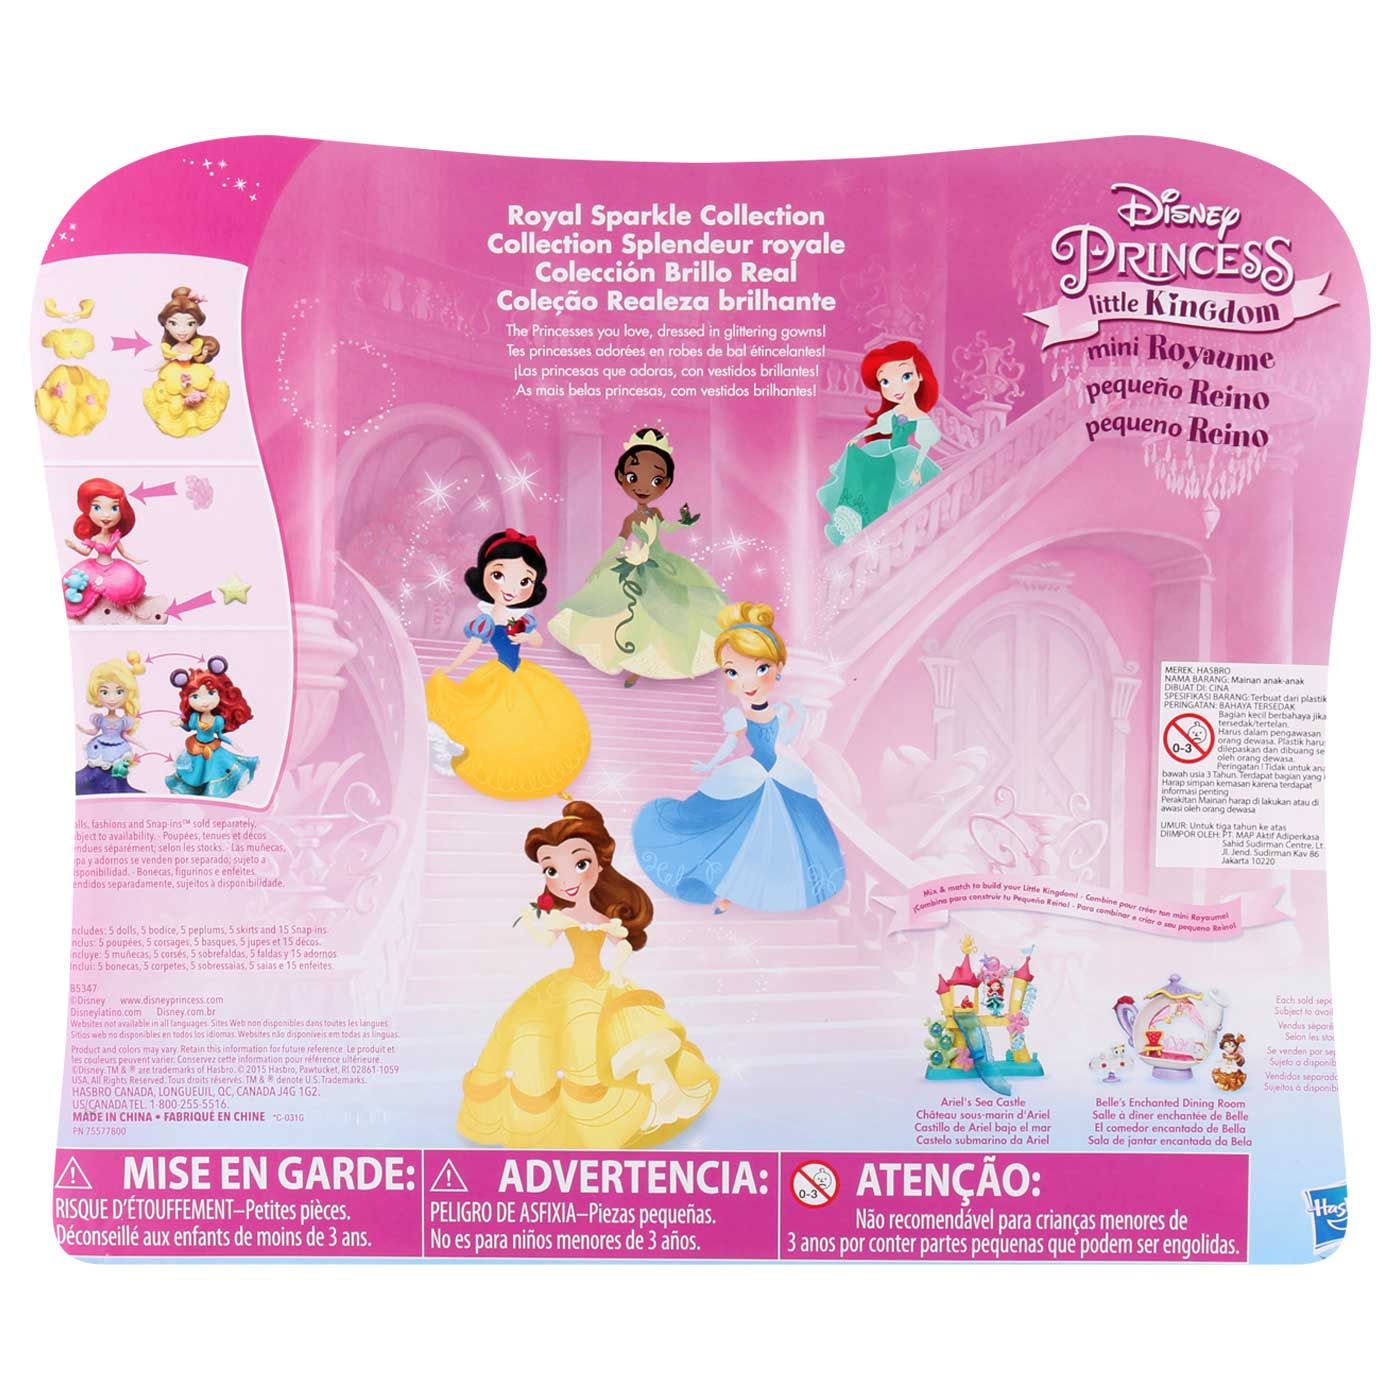 Disney Princess Royal Sparkle Collection 0416 - 2